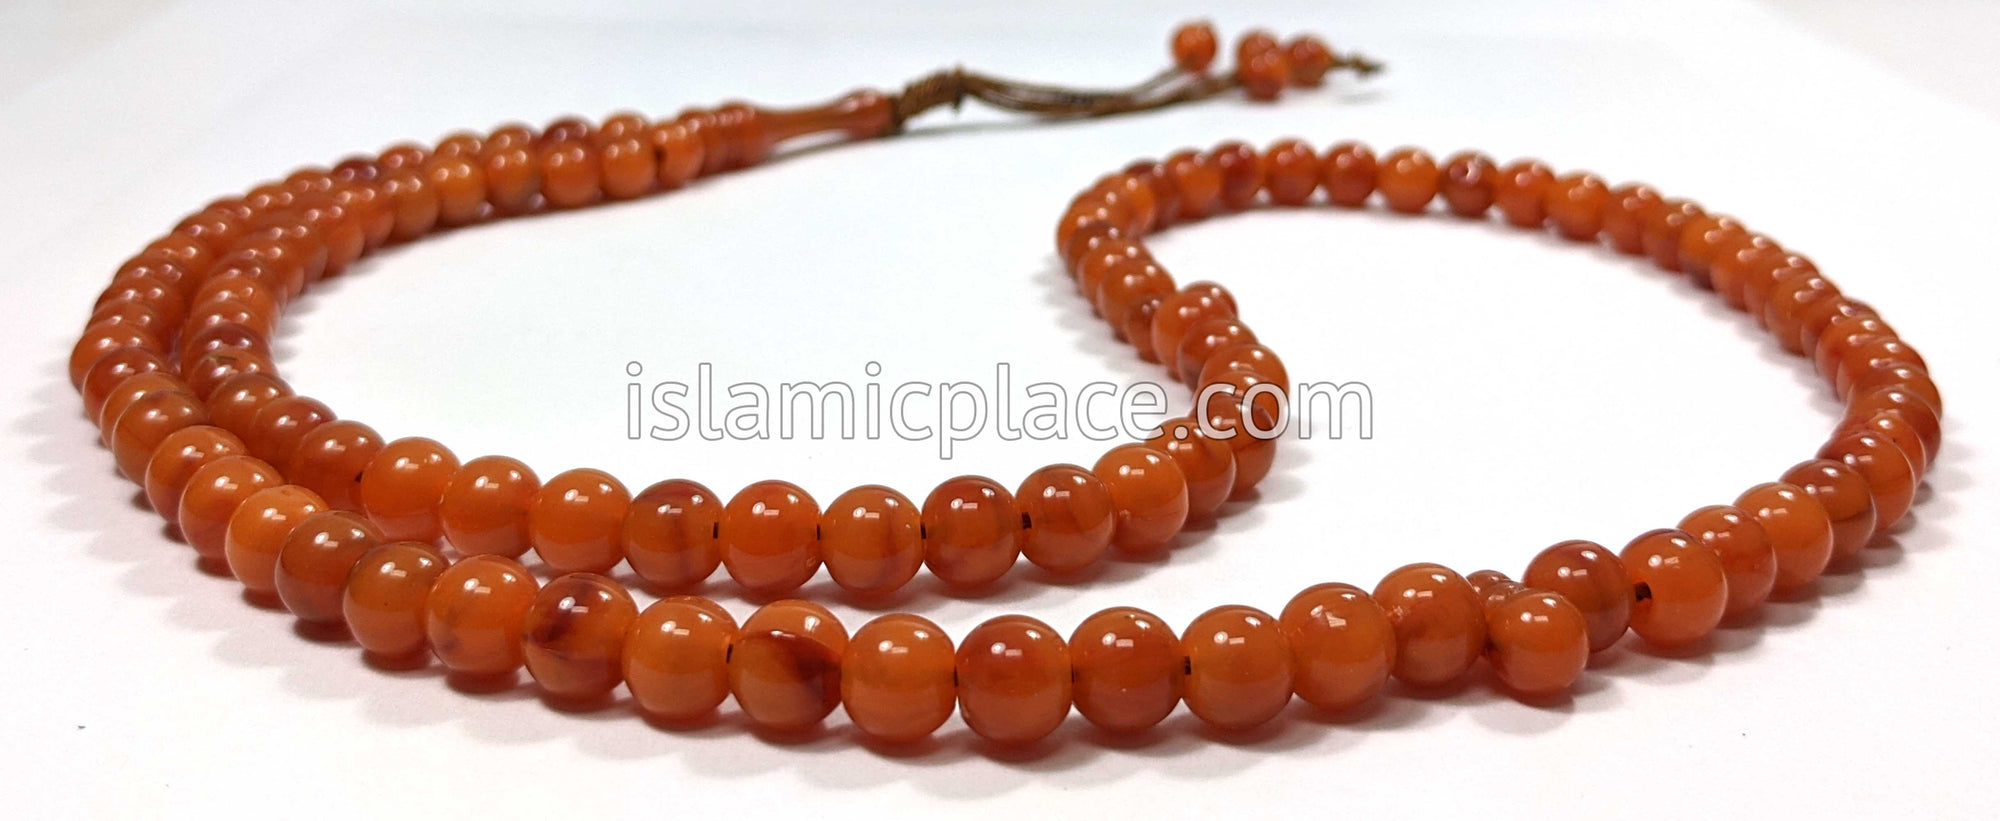 Copper - Khalil Tasbih Prayer Beads